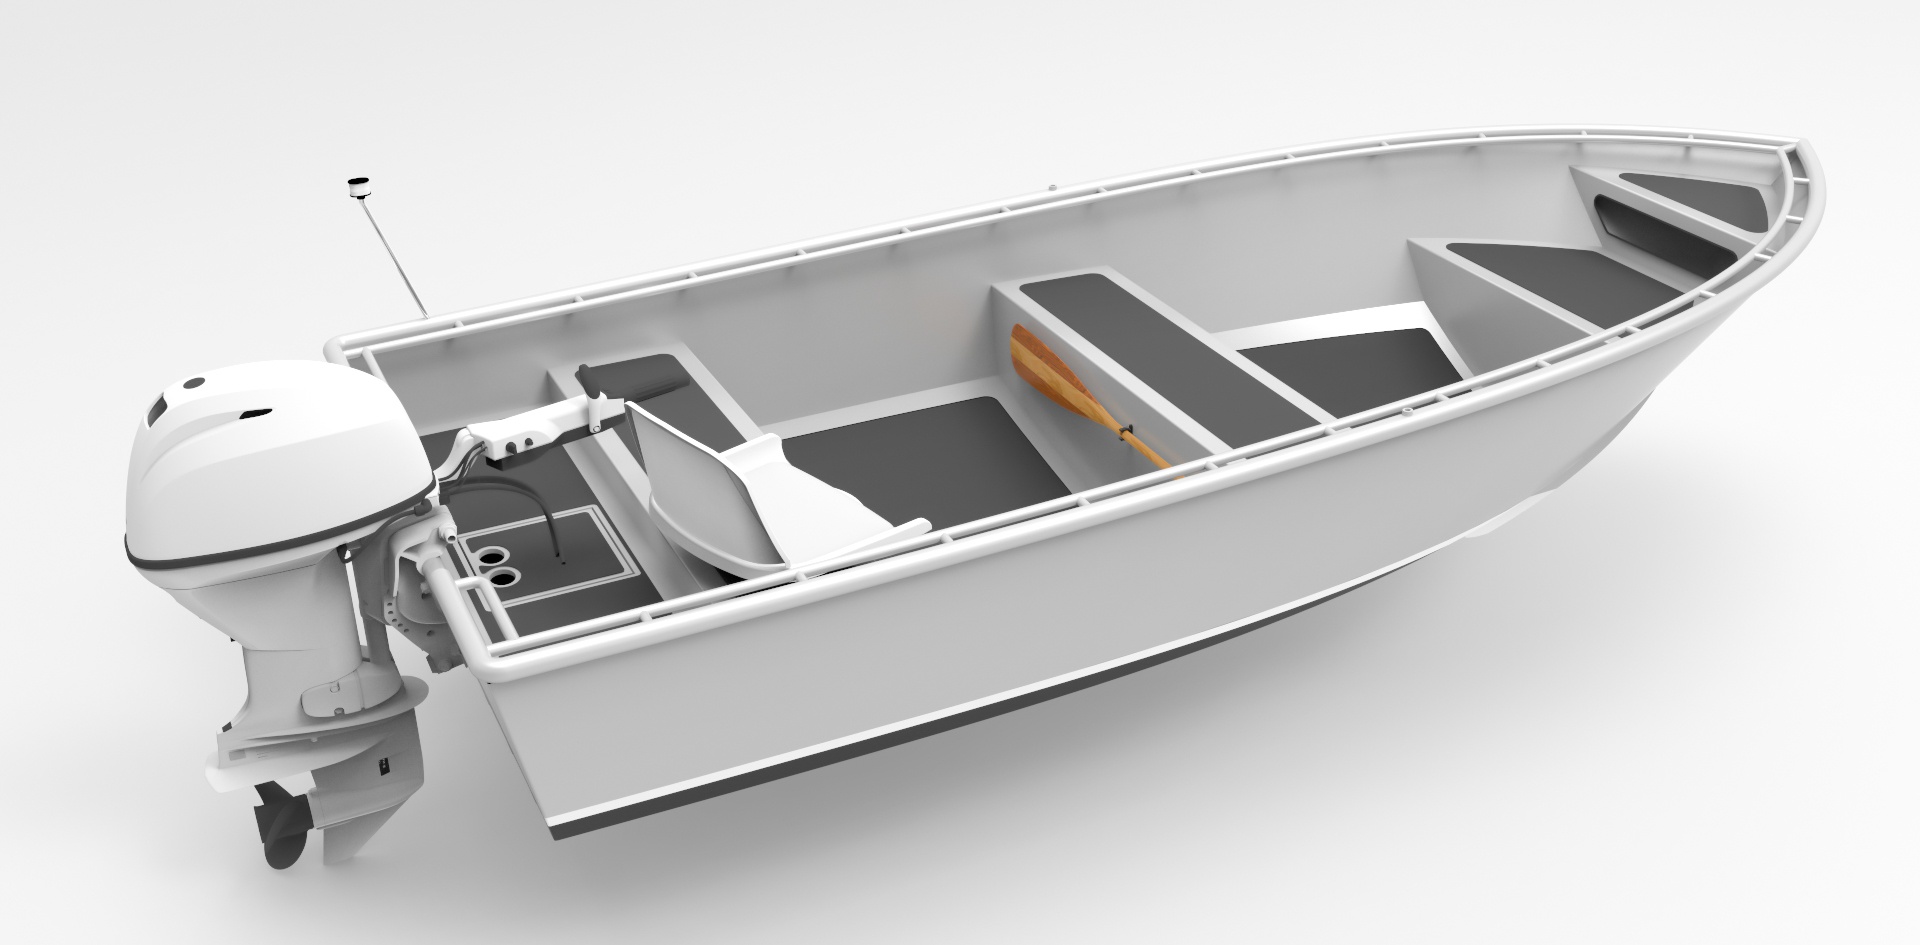 14 Foot (4.3m) Skiff - Utility - Metal Boat Kits